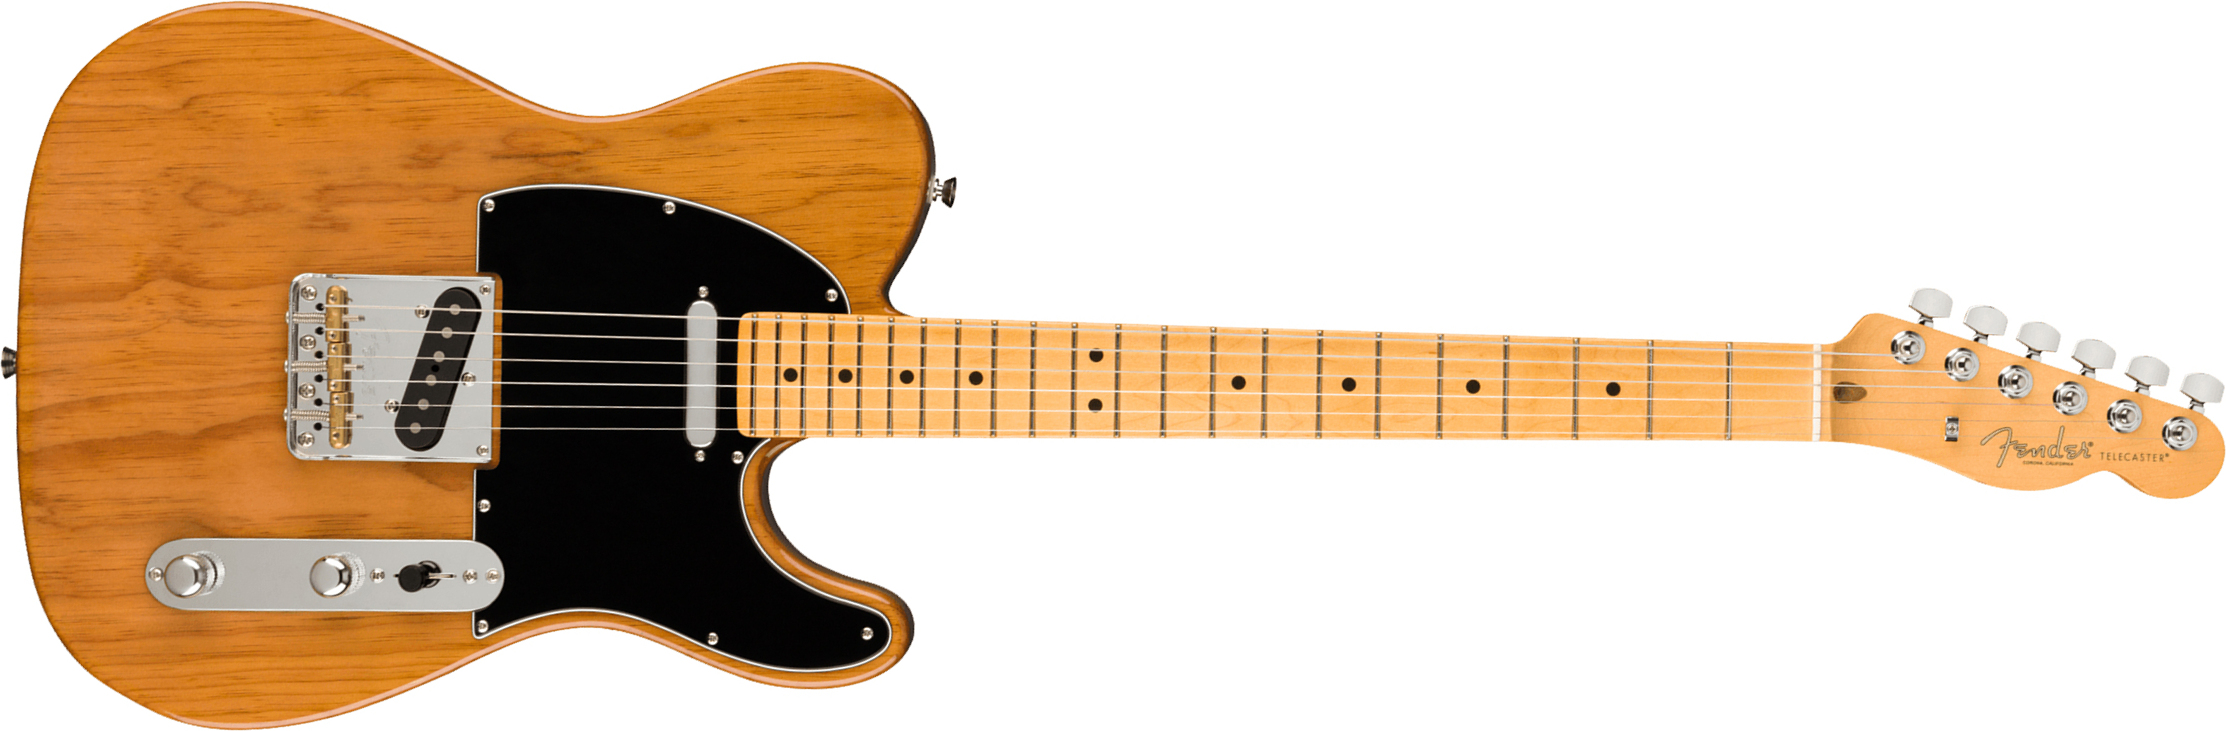 Fender Tele American Professional Ii Usa Mn - Roasted Pine - Tel shape electric guitar - Main picture